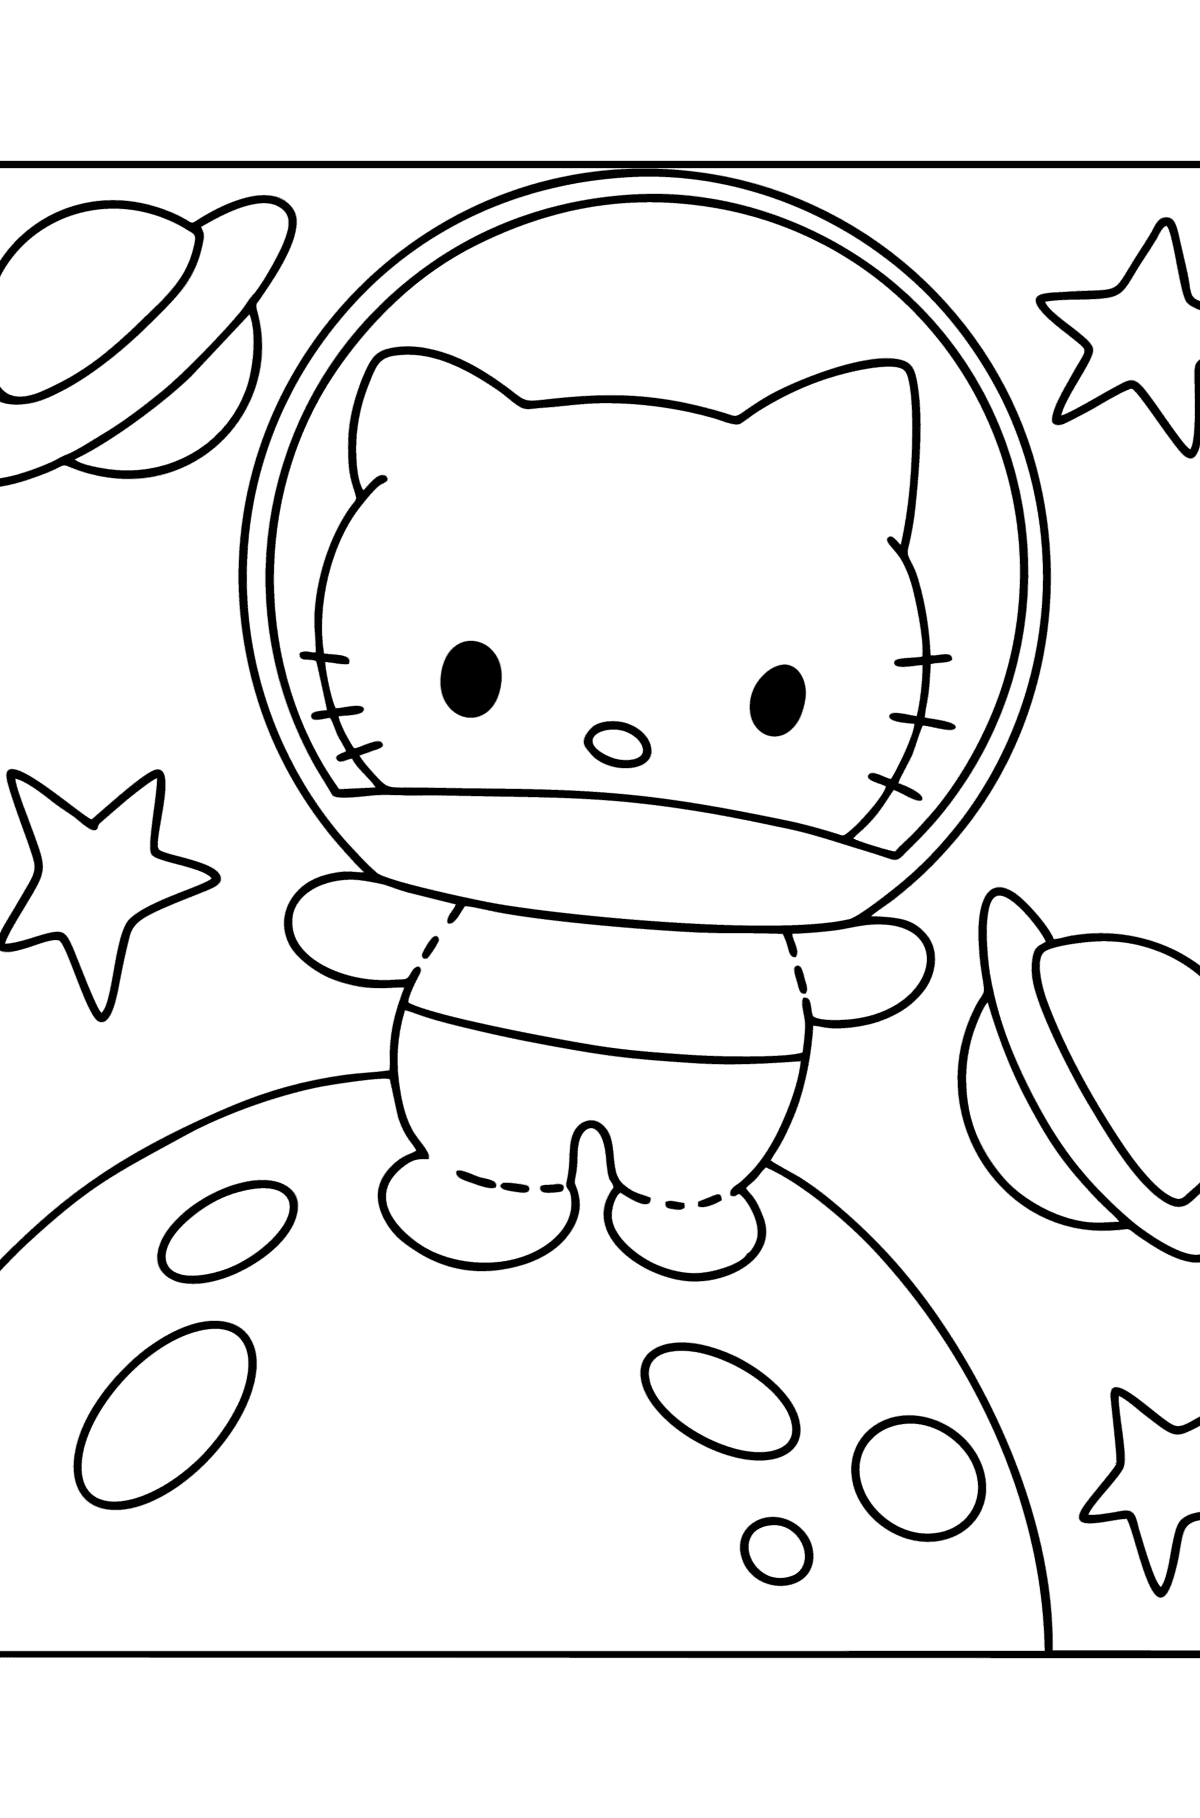 Dibujo de Astronauta de Hello Kitty para colorear - Dibujos para Colorear para Niños